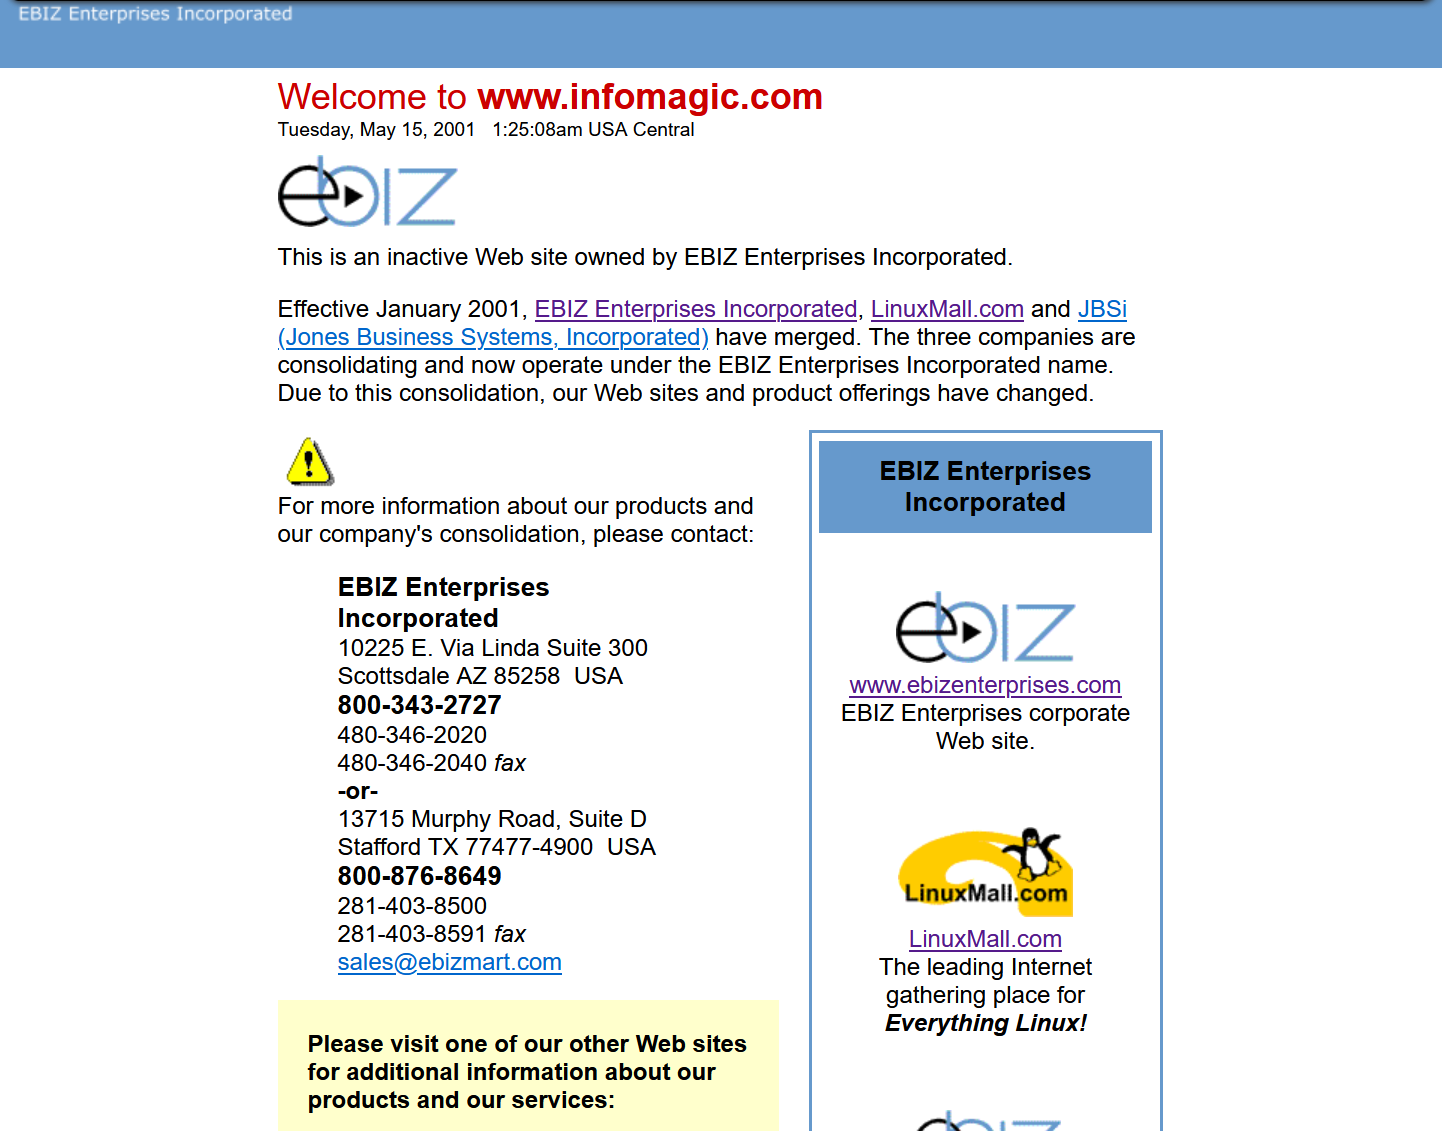 The EBIZ placeholder site